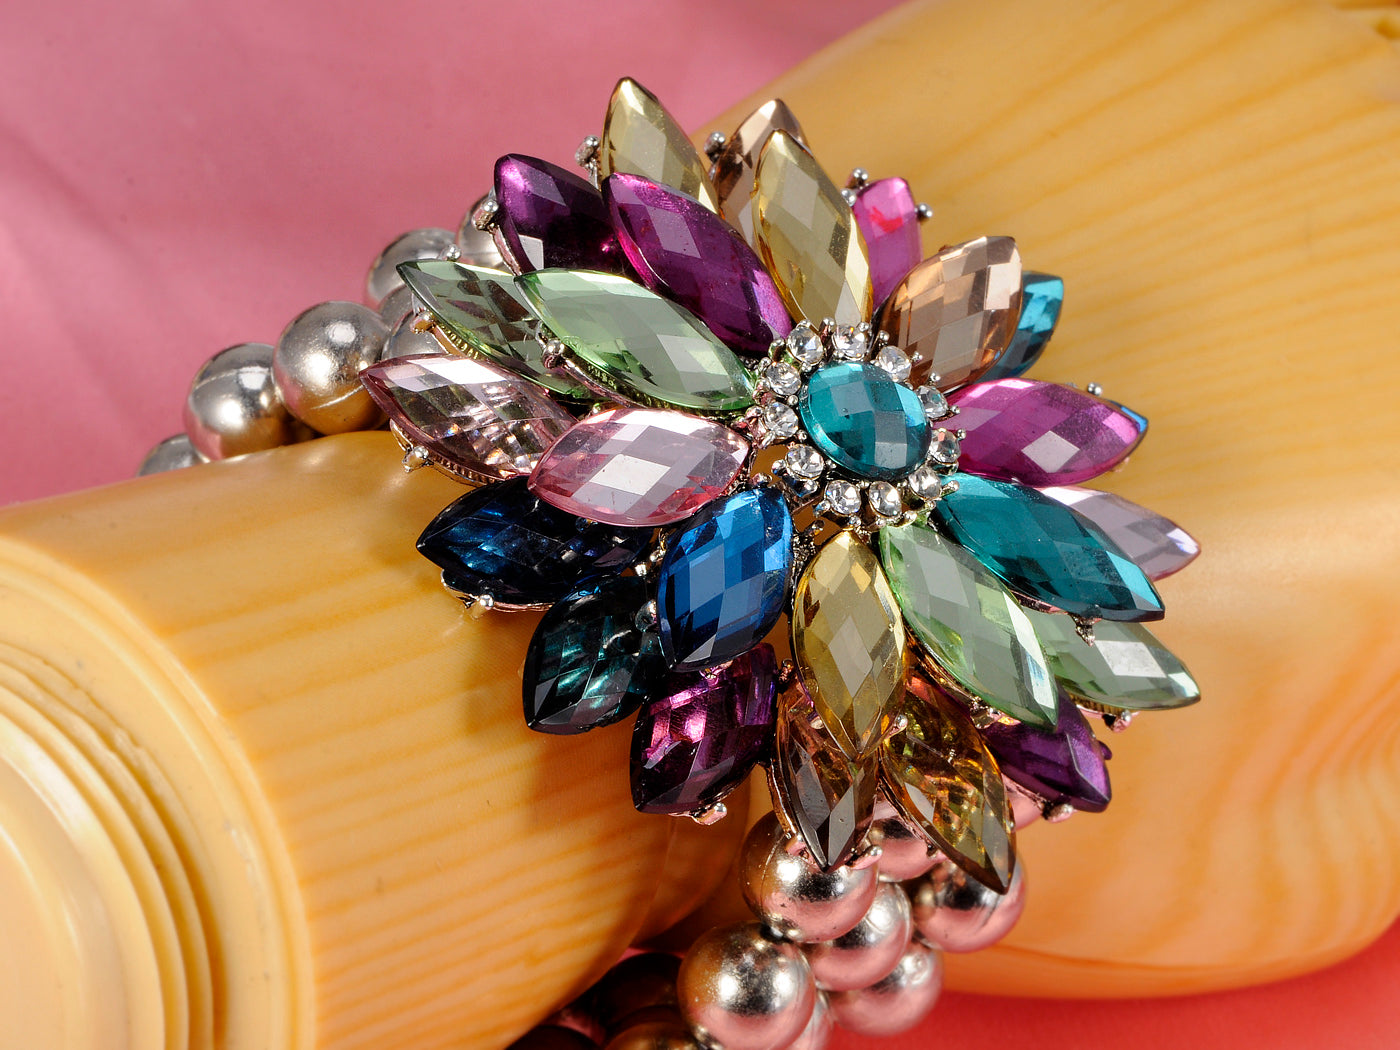 Colorful Spring Floral Flower Beaded Bracelet Bangle Cuff